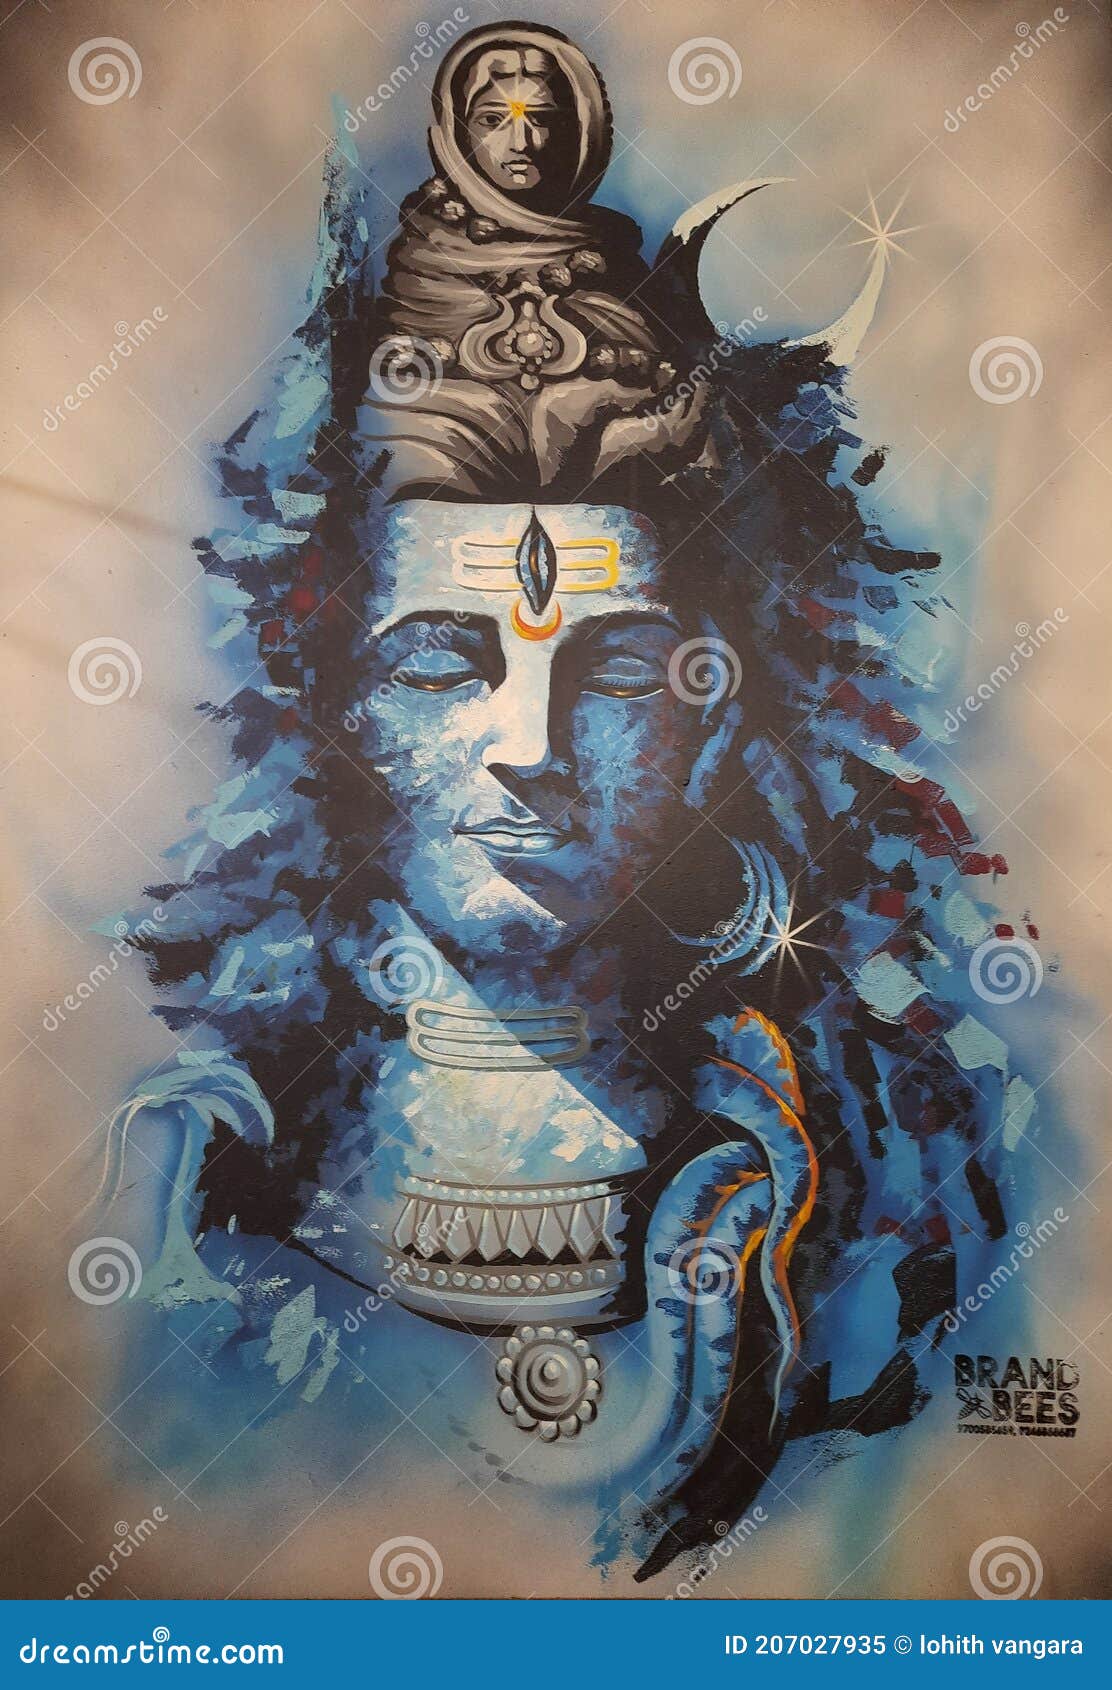 Tải xuống APK Lord Shiva Hd Wallpaper cho Android